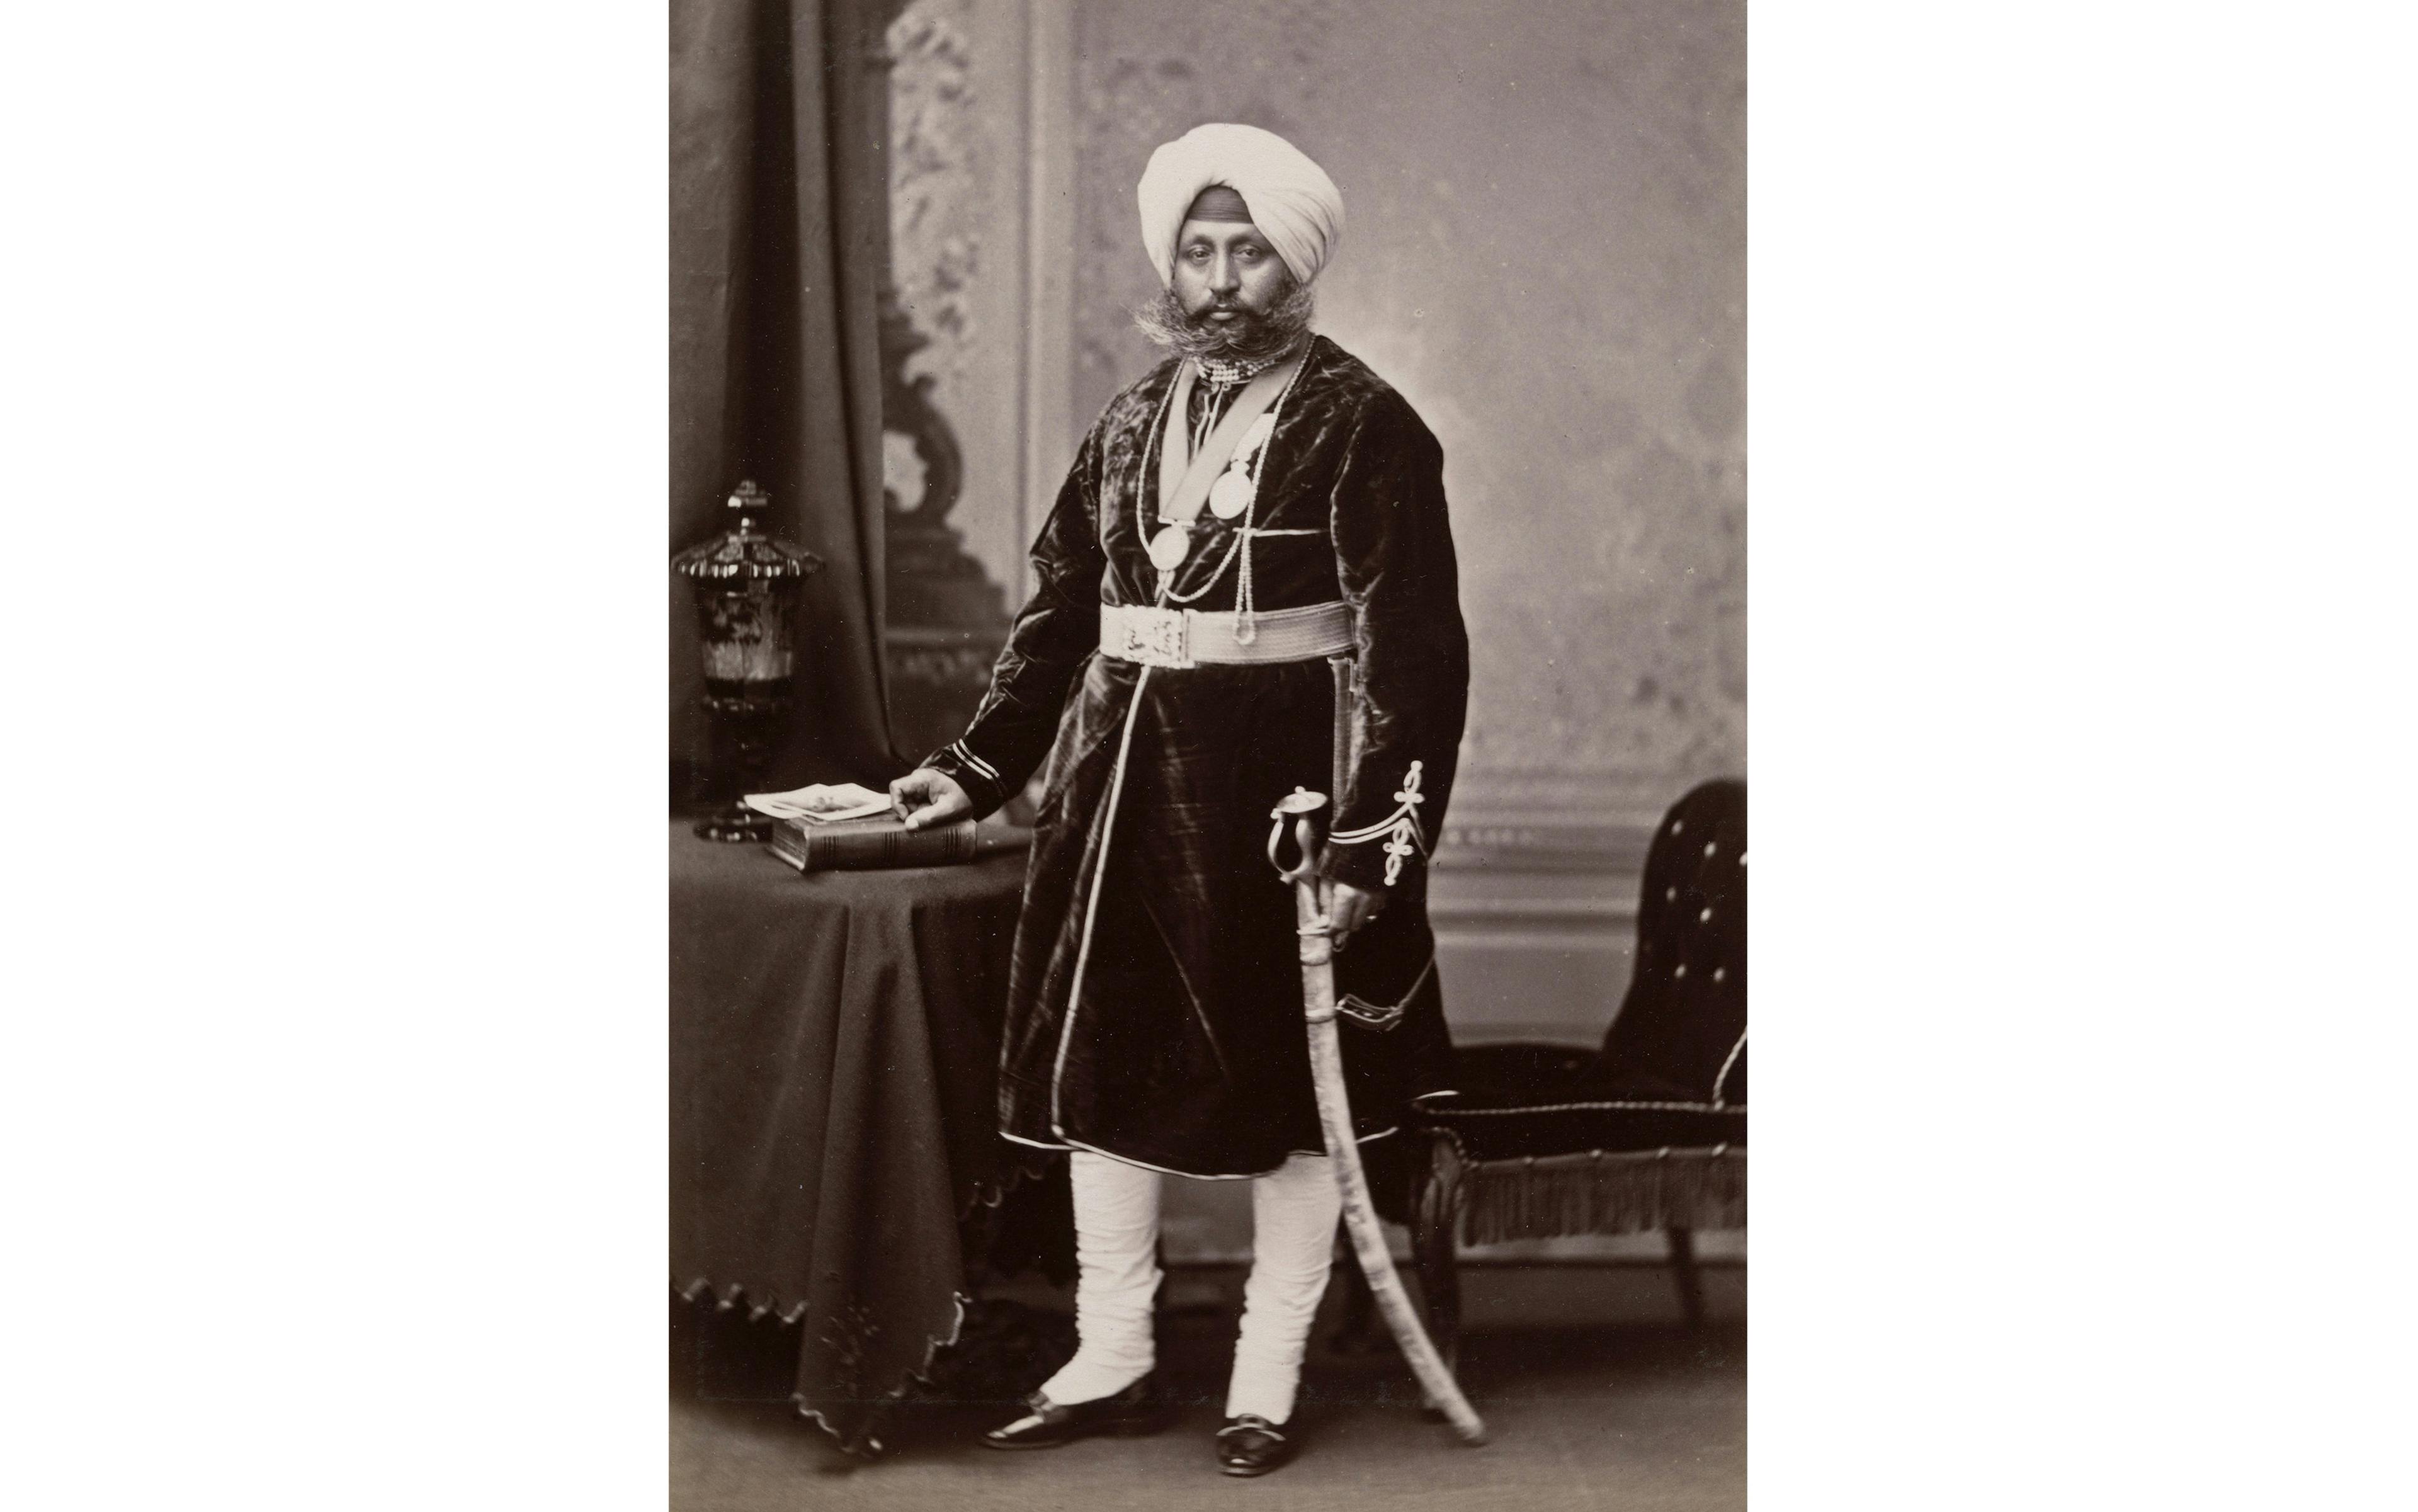 Bikram Singh of Faridkot